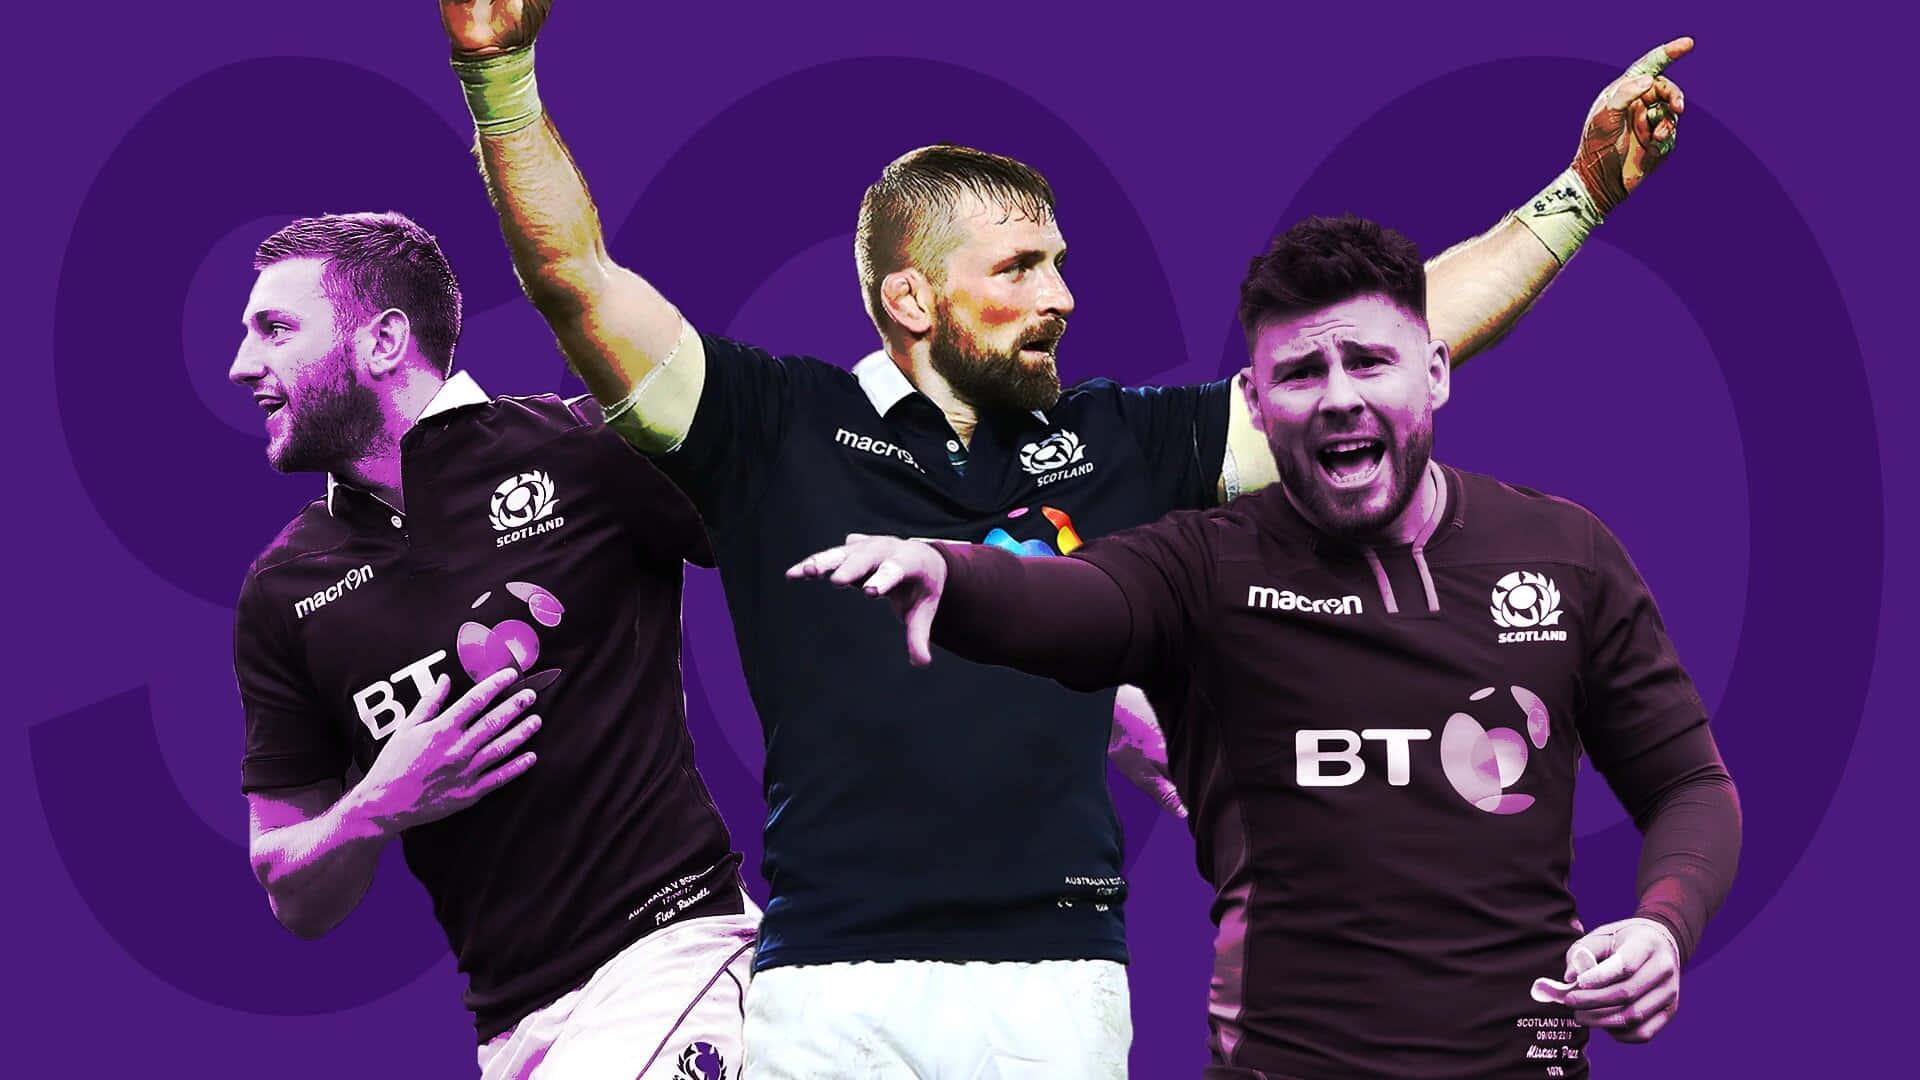 Poderescocés Imparable: El Equipo De Rugby De Escocia En Acción. Fondo de pantalla